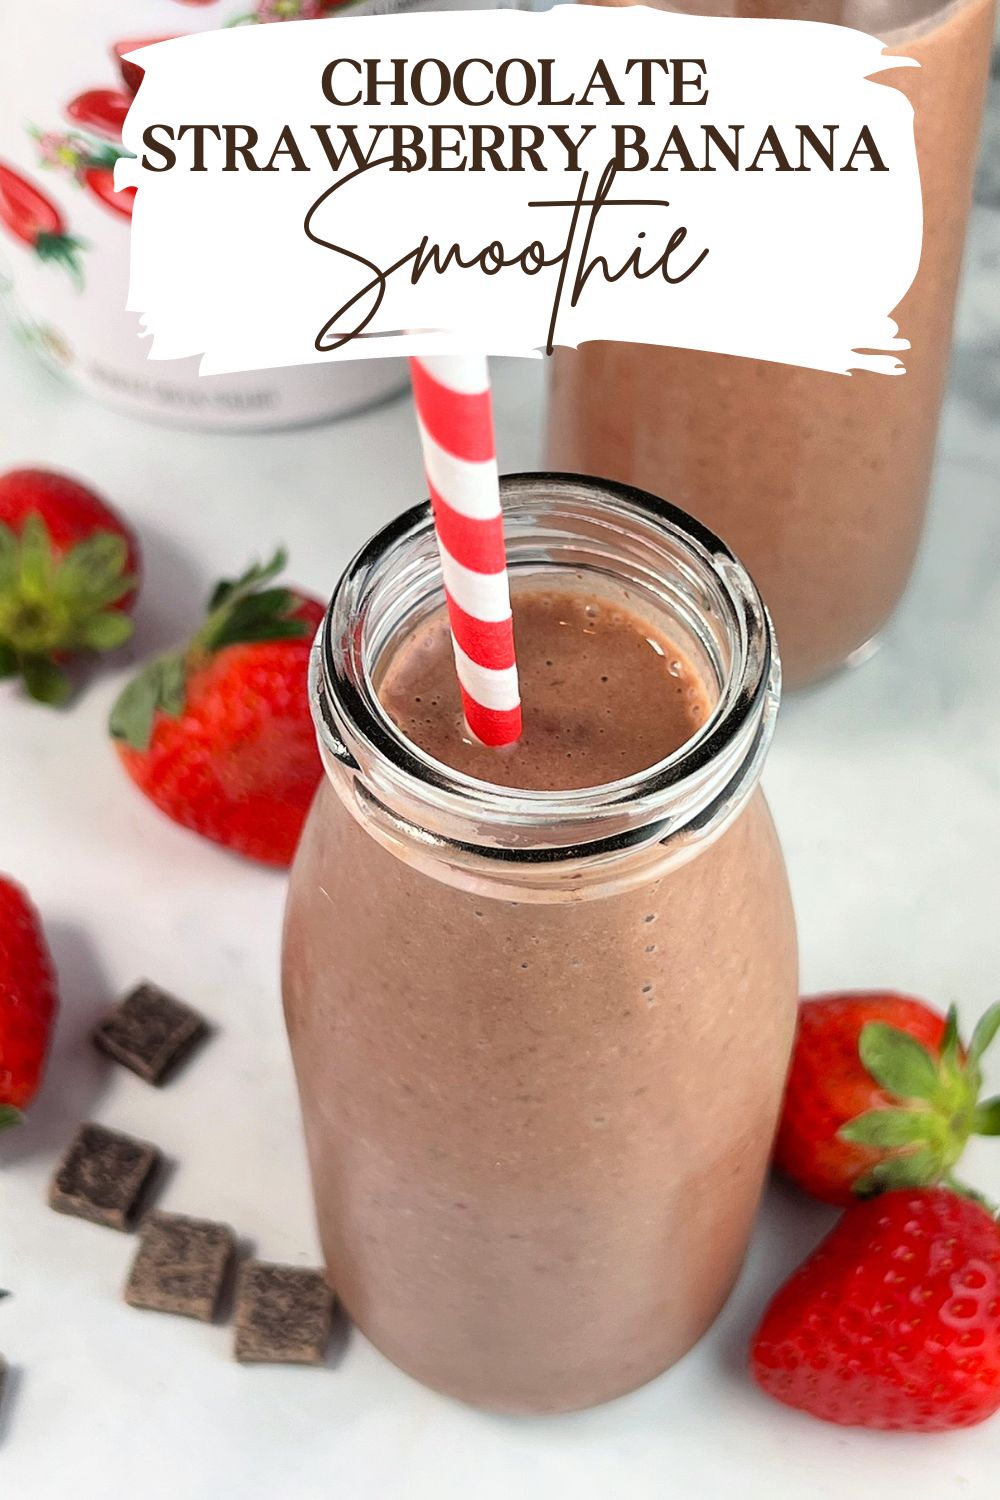 Chocolate Strawberry Banana Smoothie via @preventionrd